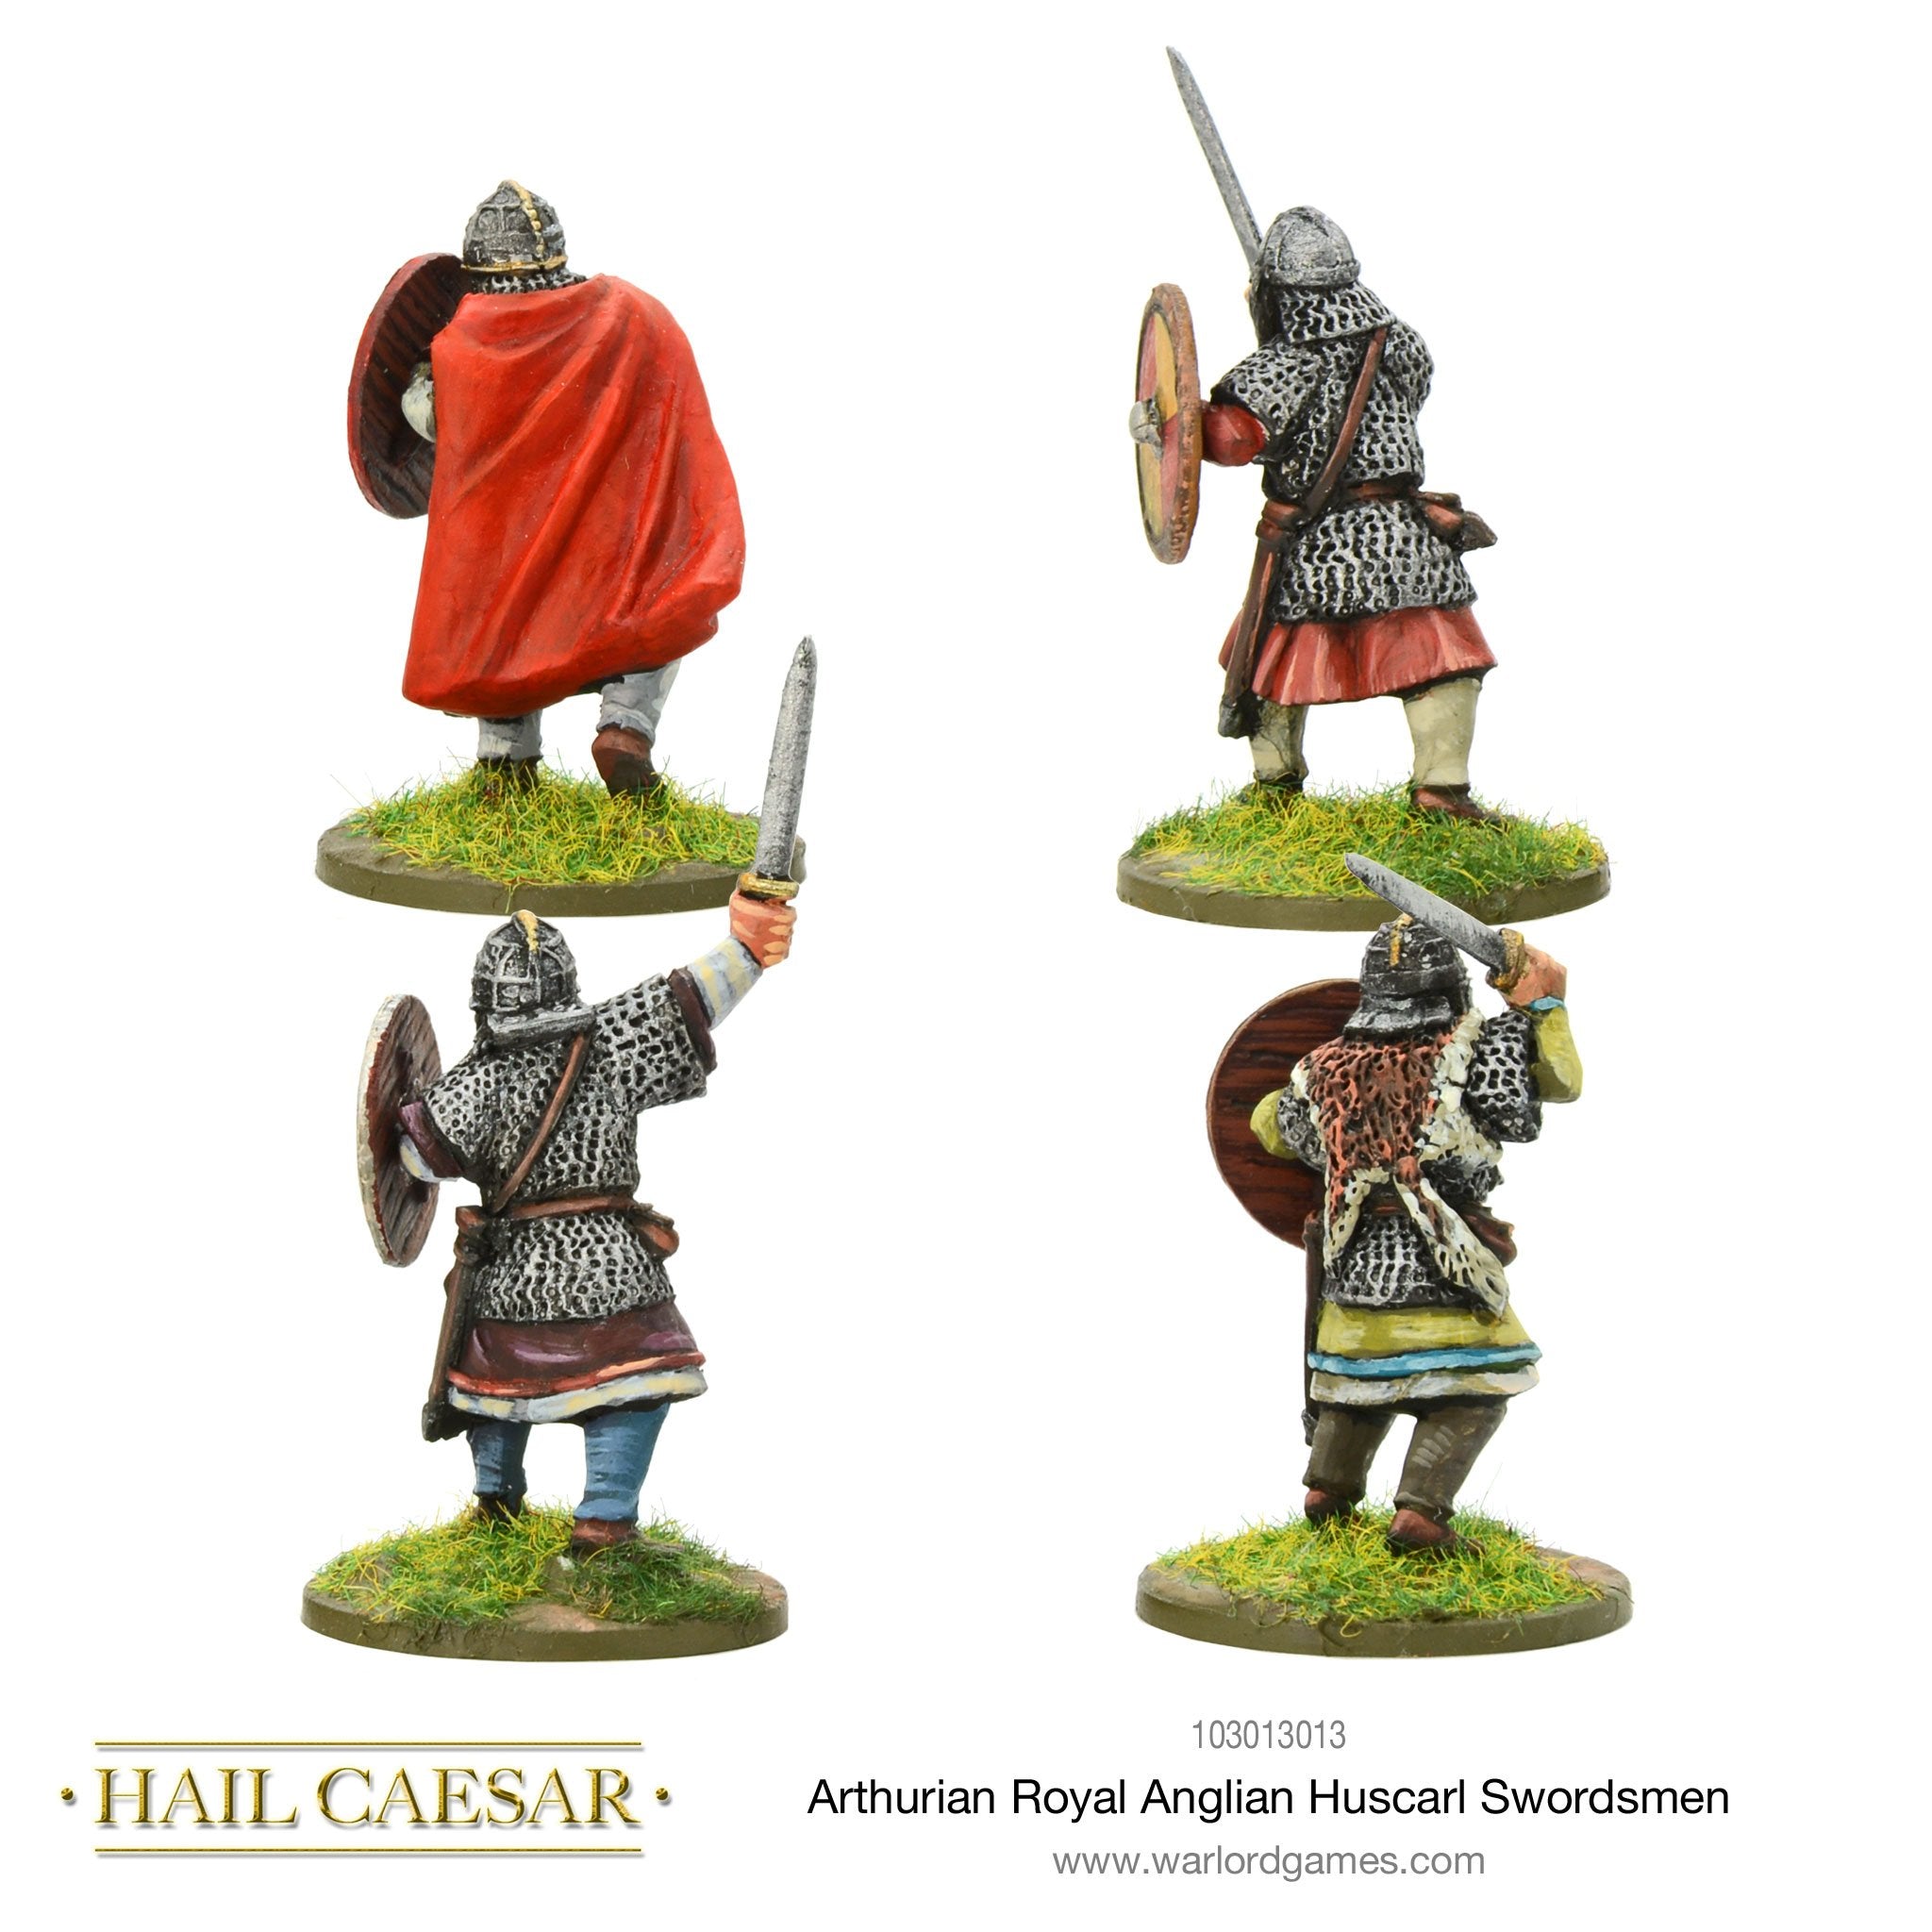 Arthurian Royal Anglian Huscarl swordsmen